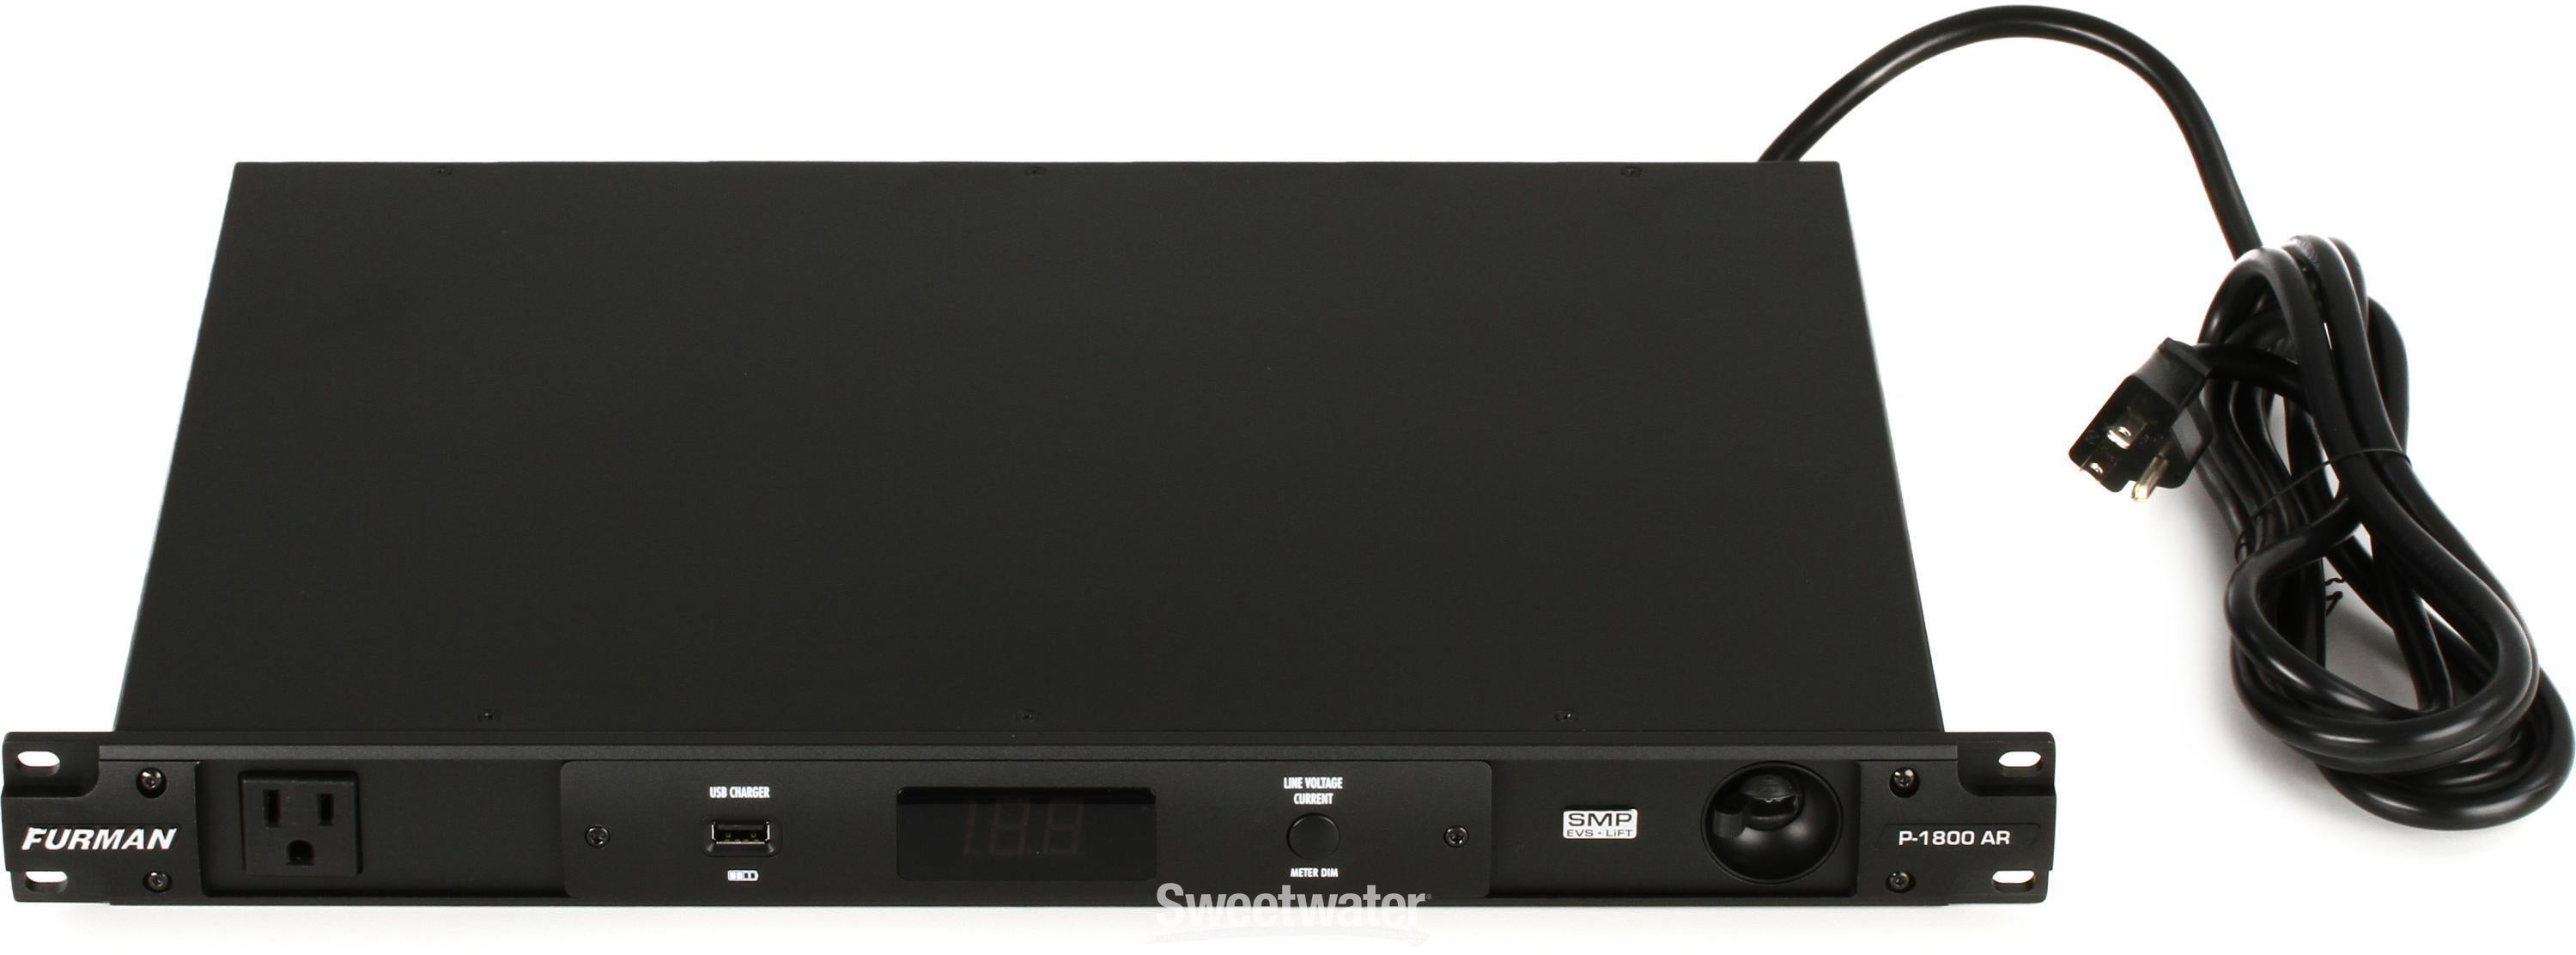 Furman P-1800 AR Voltage Regulator / Power Conditioner | Sweetwater